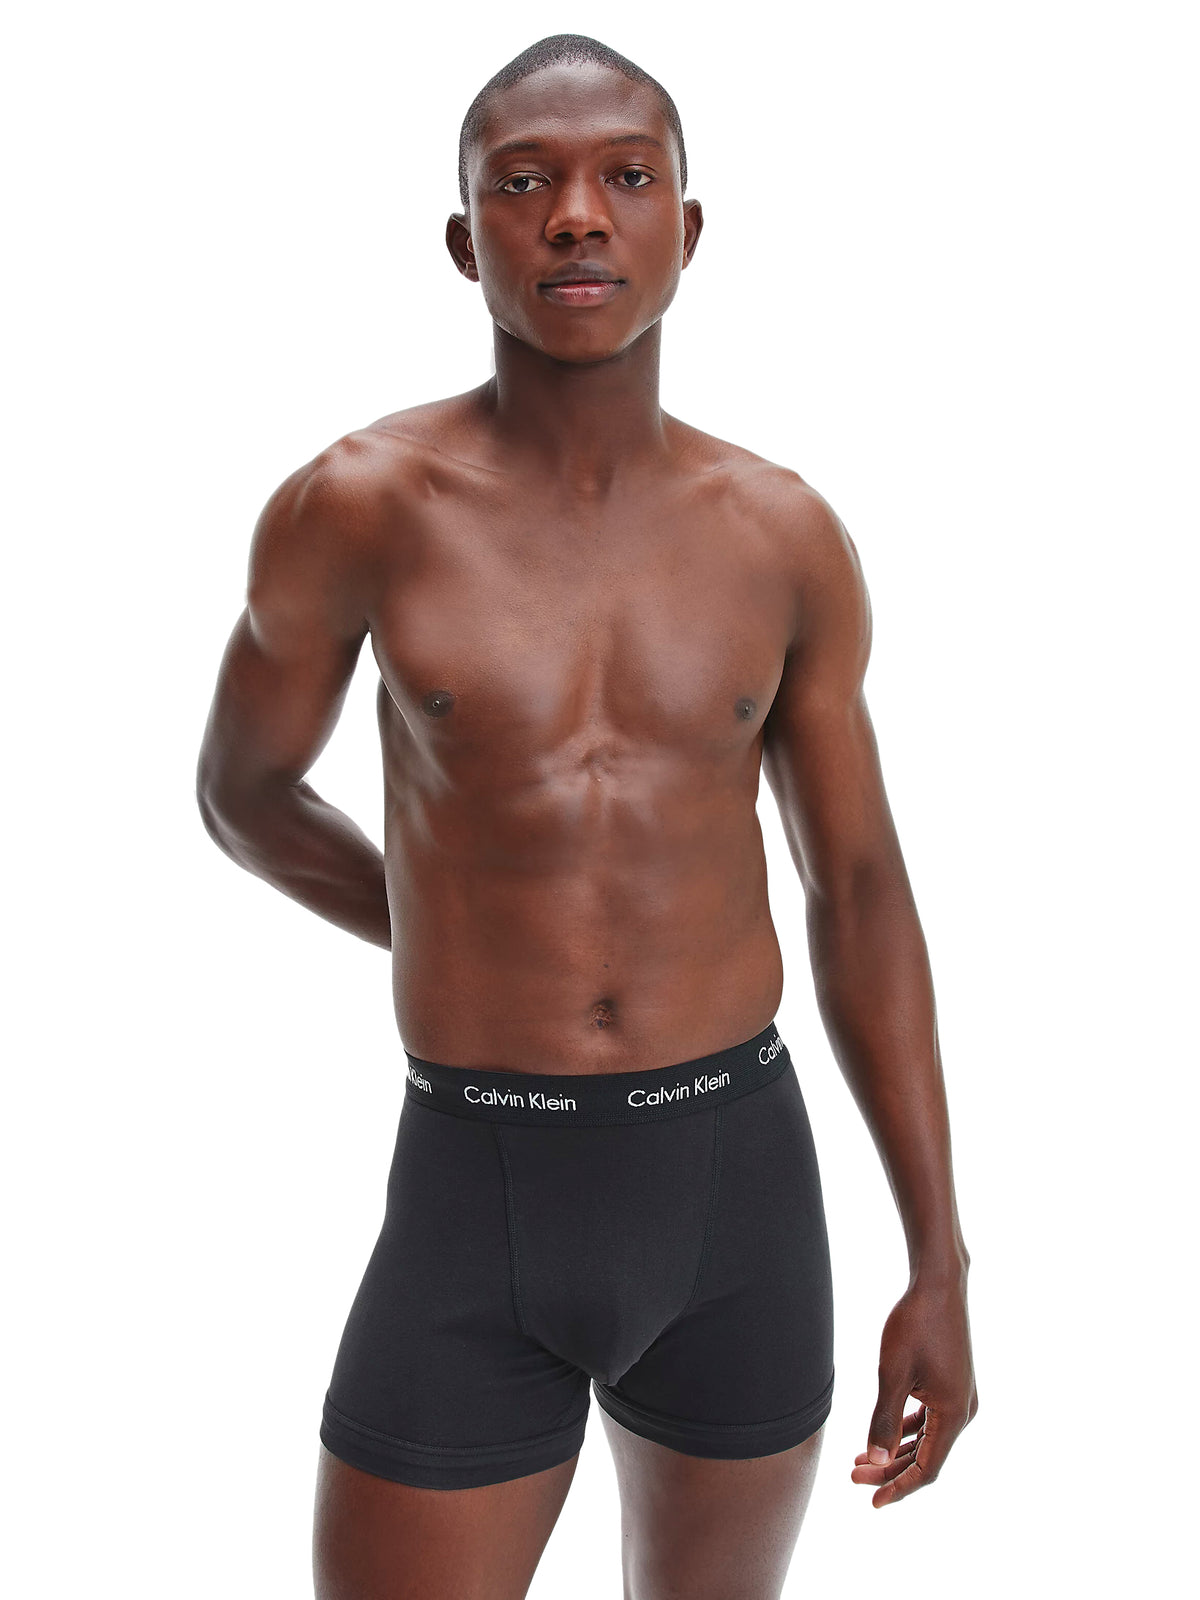 Calvin Klein Stretch Boxer Shorts/ Trunks (3-Pack) - White/ B&W Stripe/ Black, 04, U2662G_IOT, White/ B&W Stripe/ Black